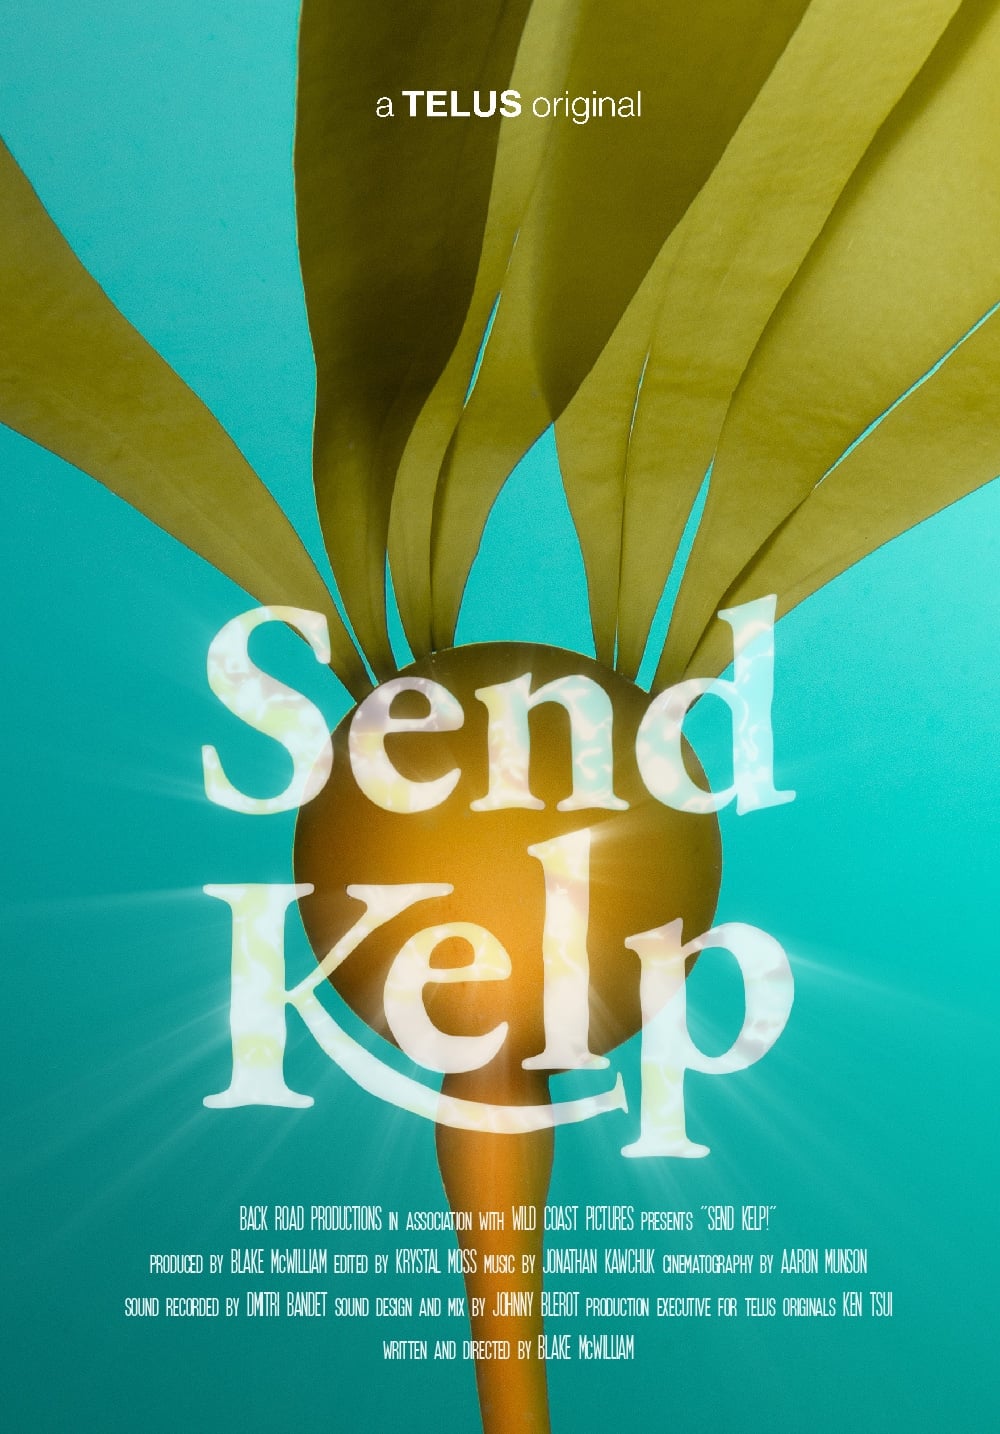 Send Kelp!